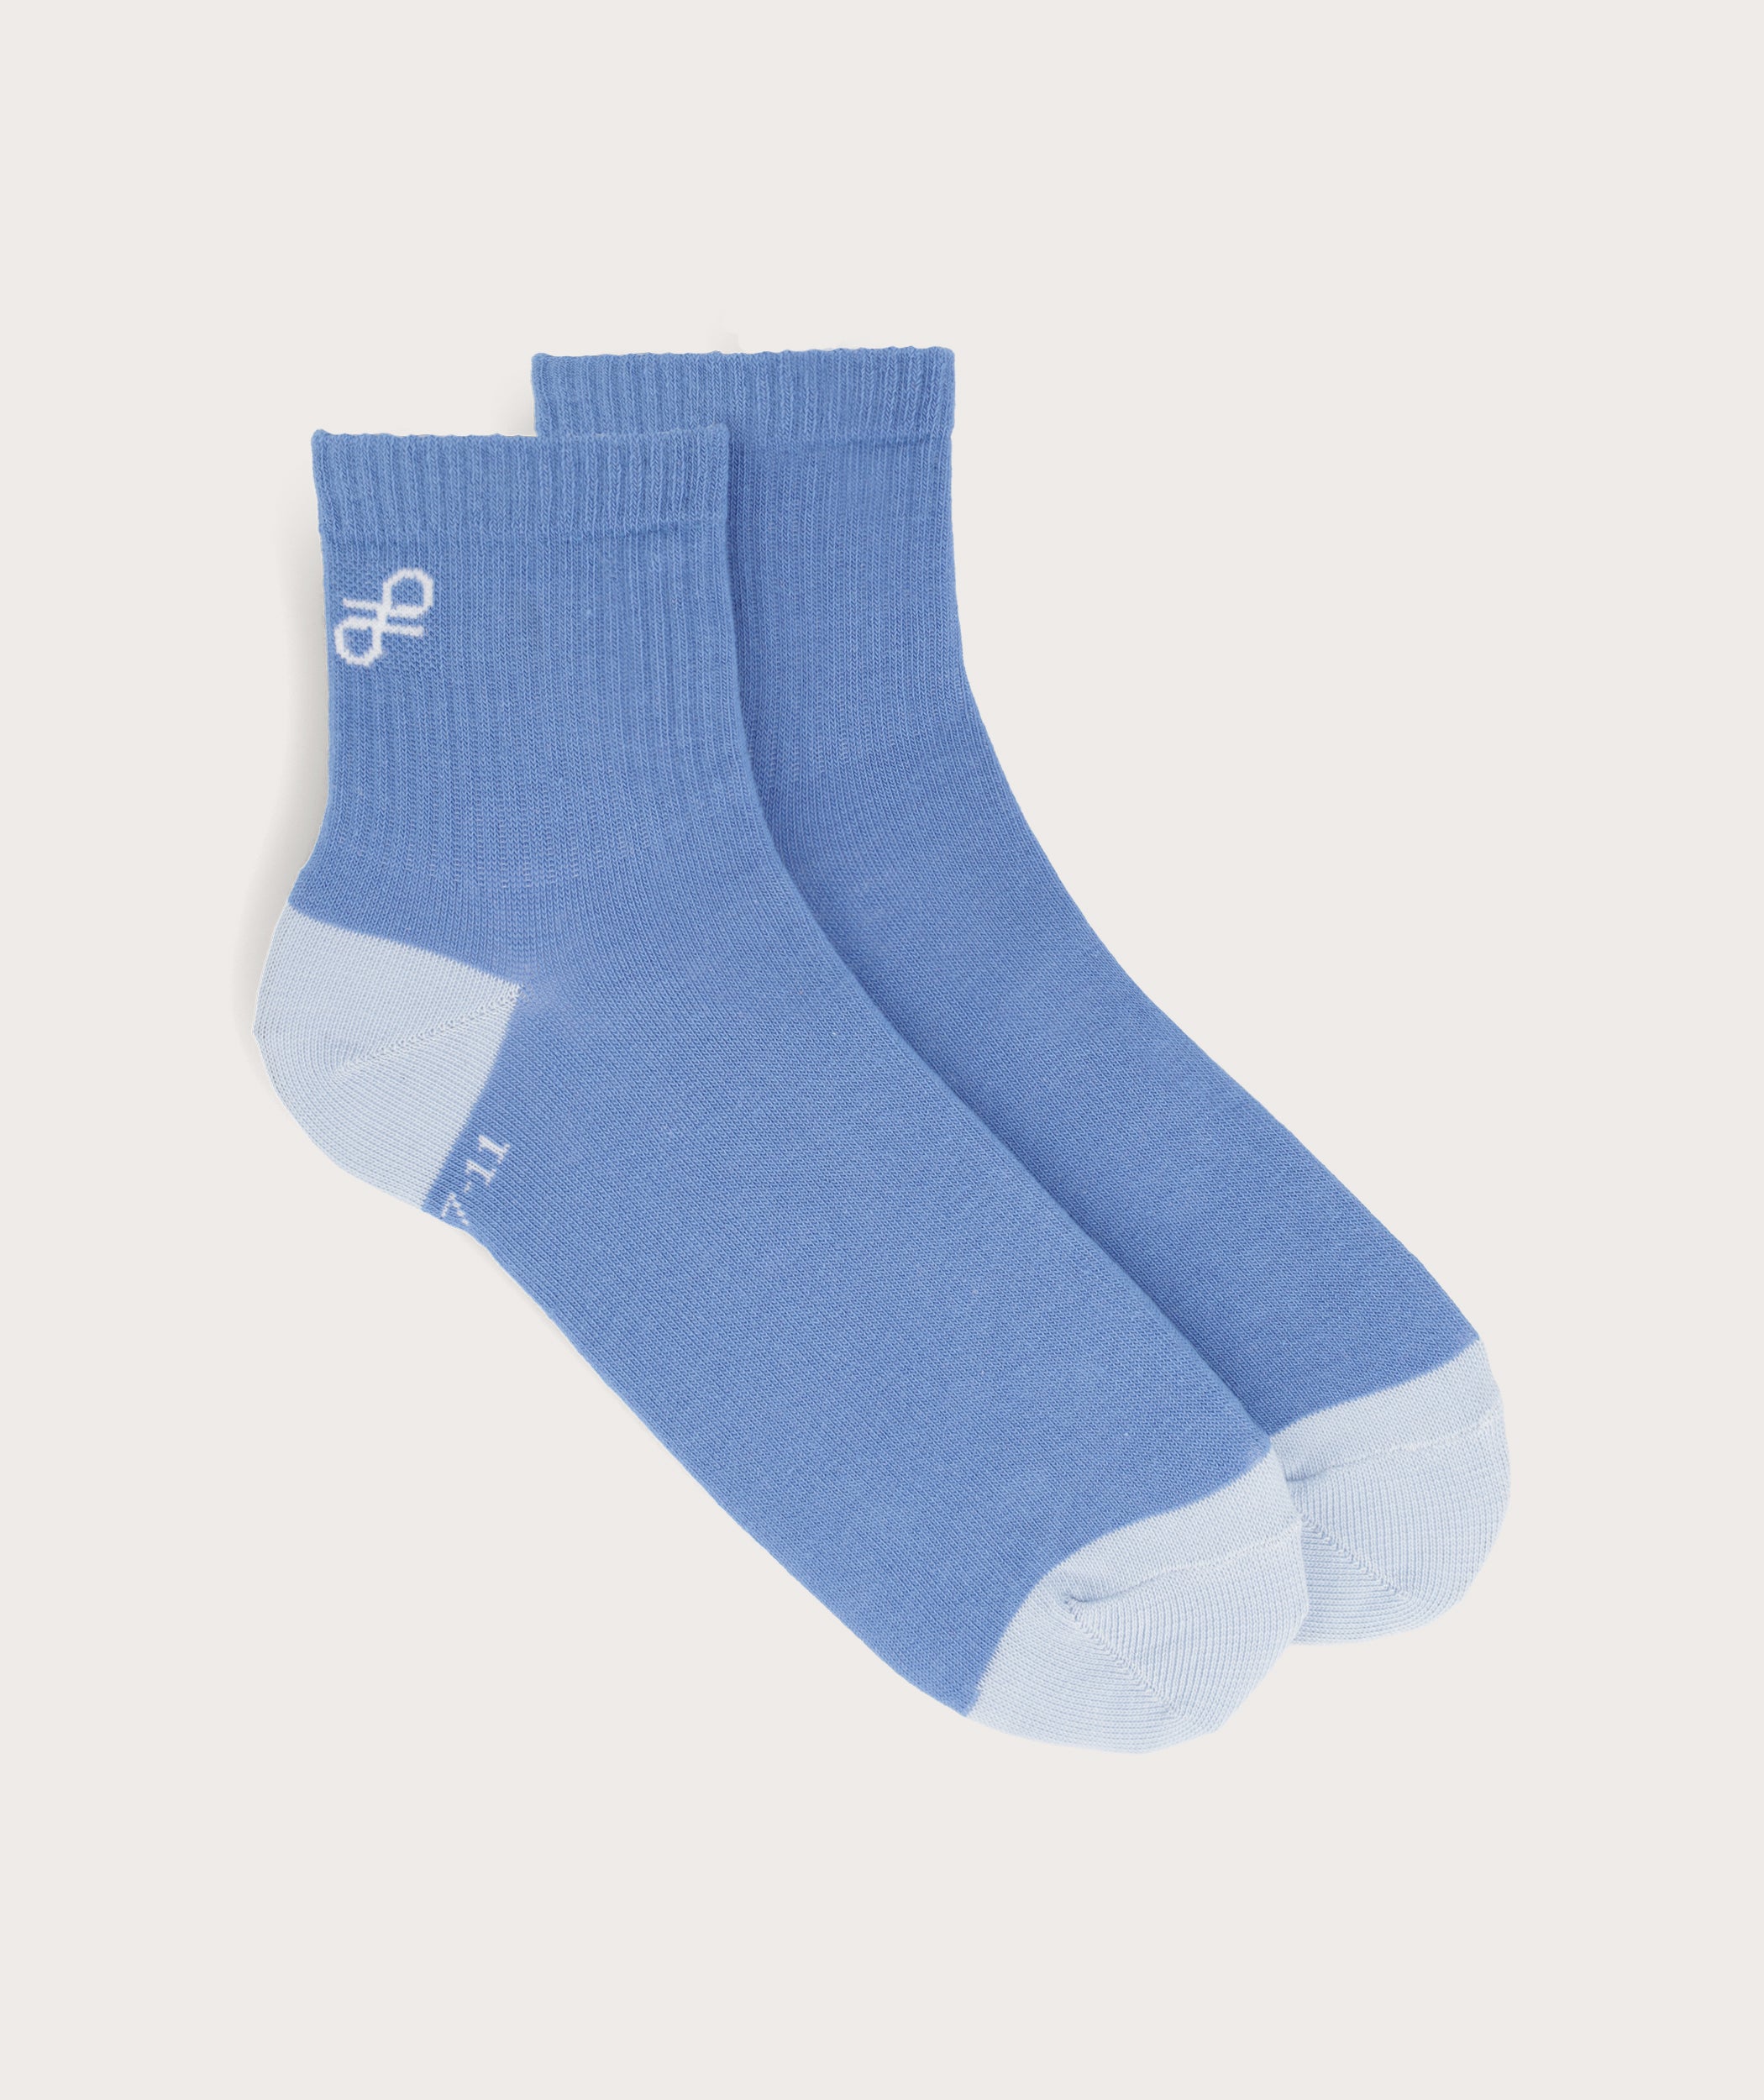 Socks FOM Active - Blue (Size 7-11)